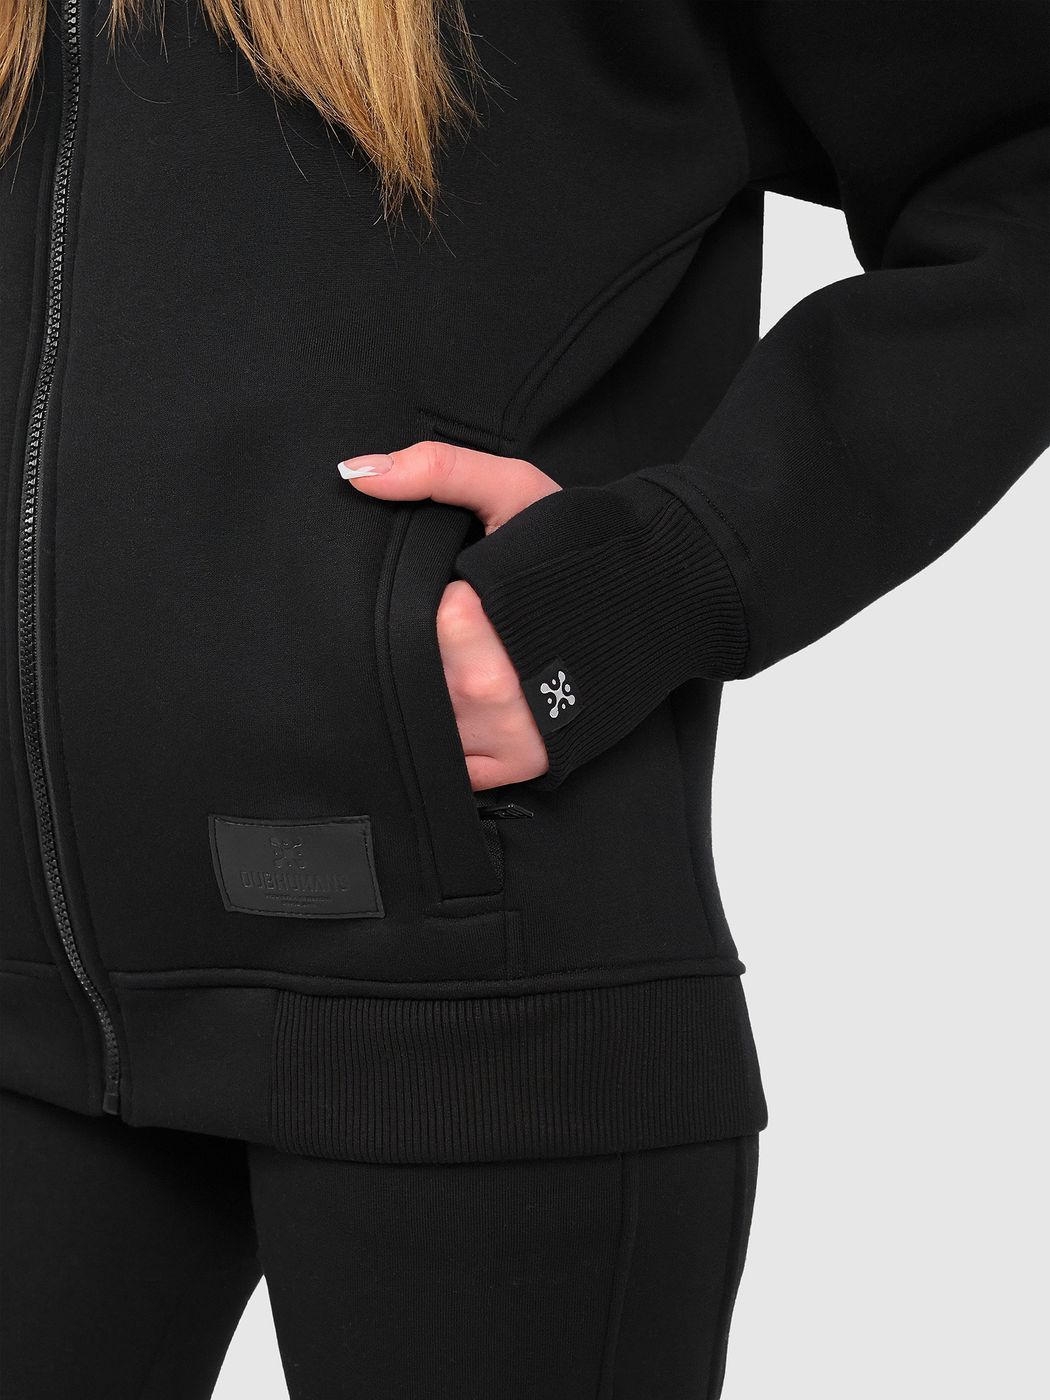 Women's tracksuit set Hoodie with a zipper, Black, XS-S, S (104 cm)